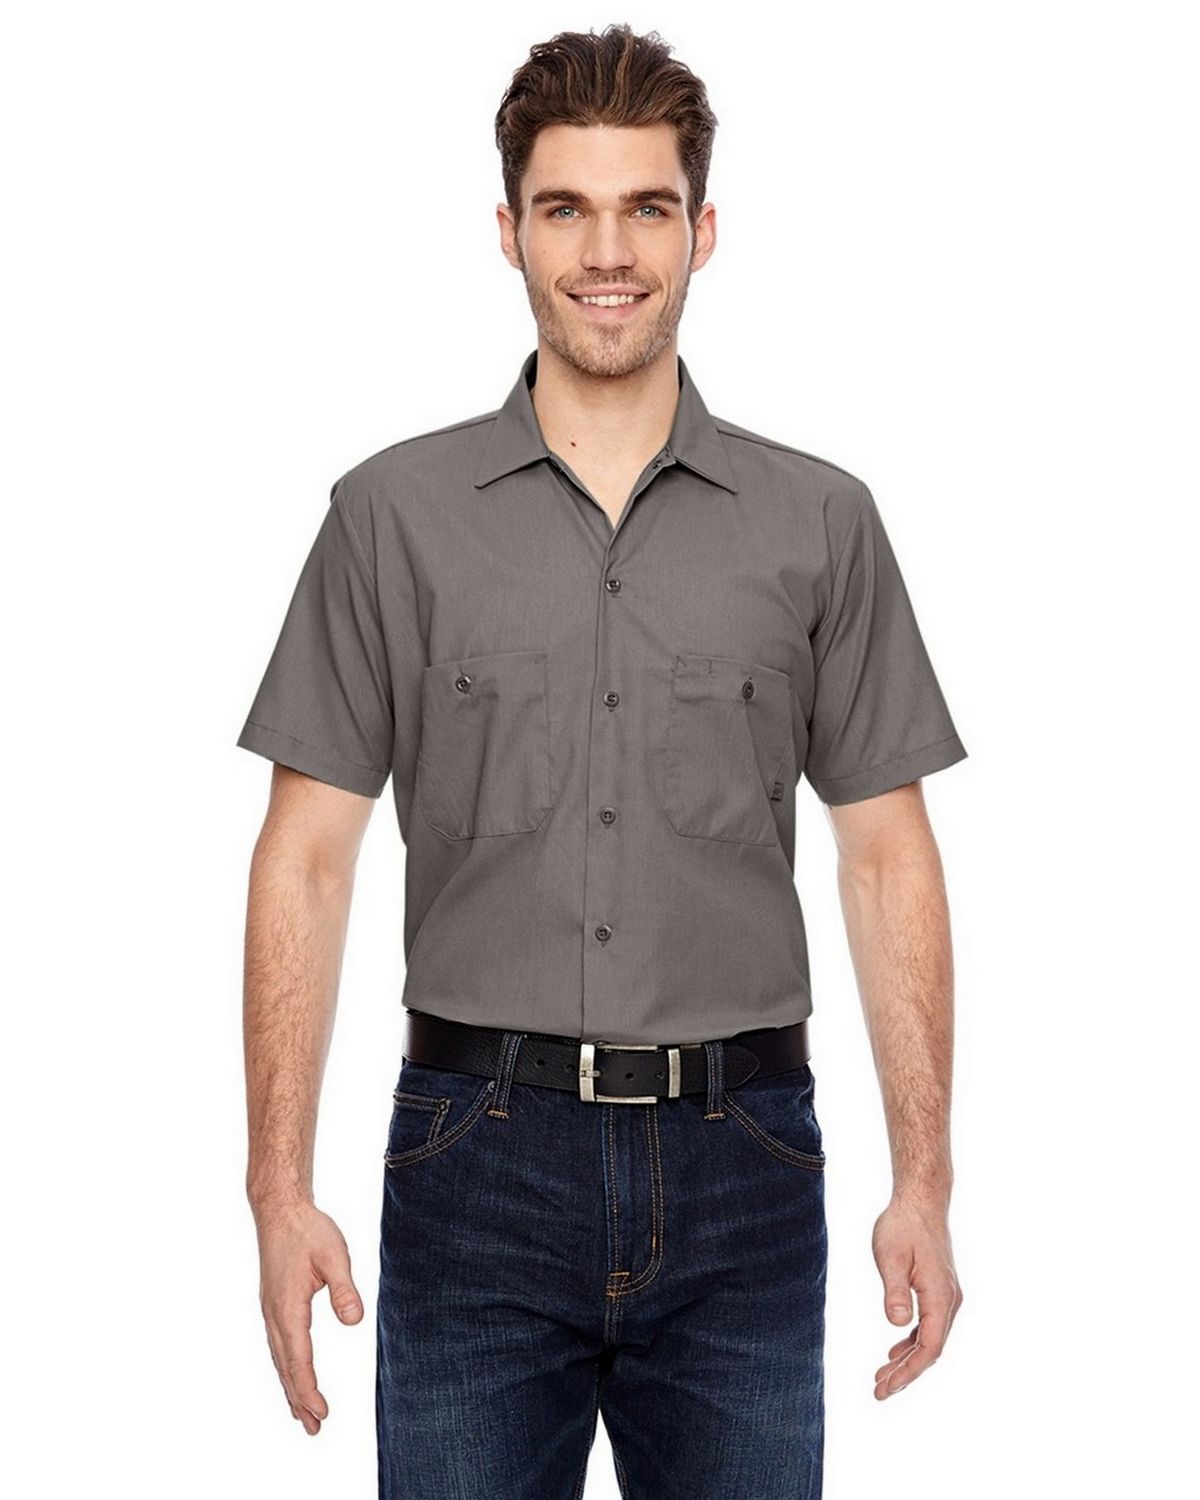 Dickies LS535 Men's Industrial Short Sleeve Work Shirt - ApparelnBags.com